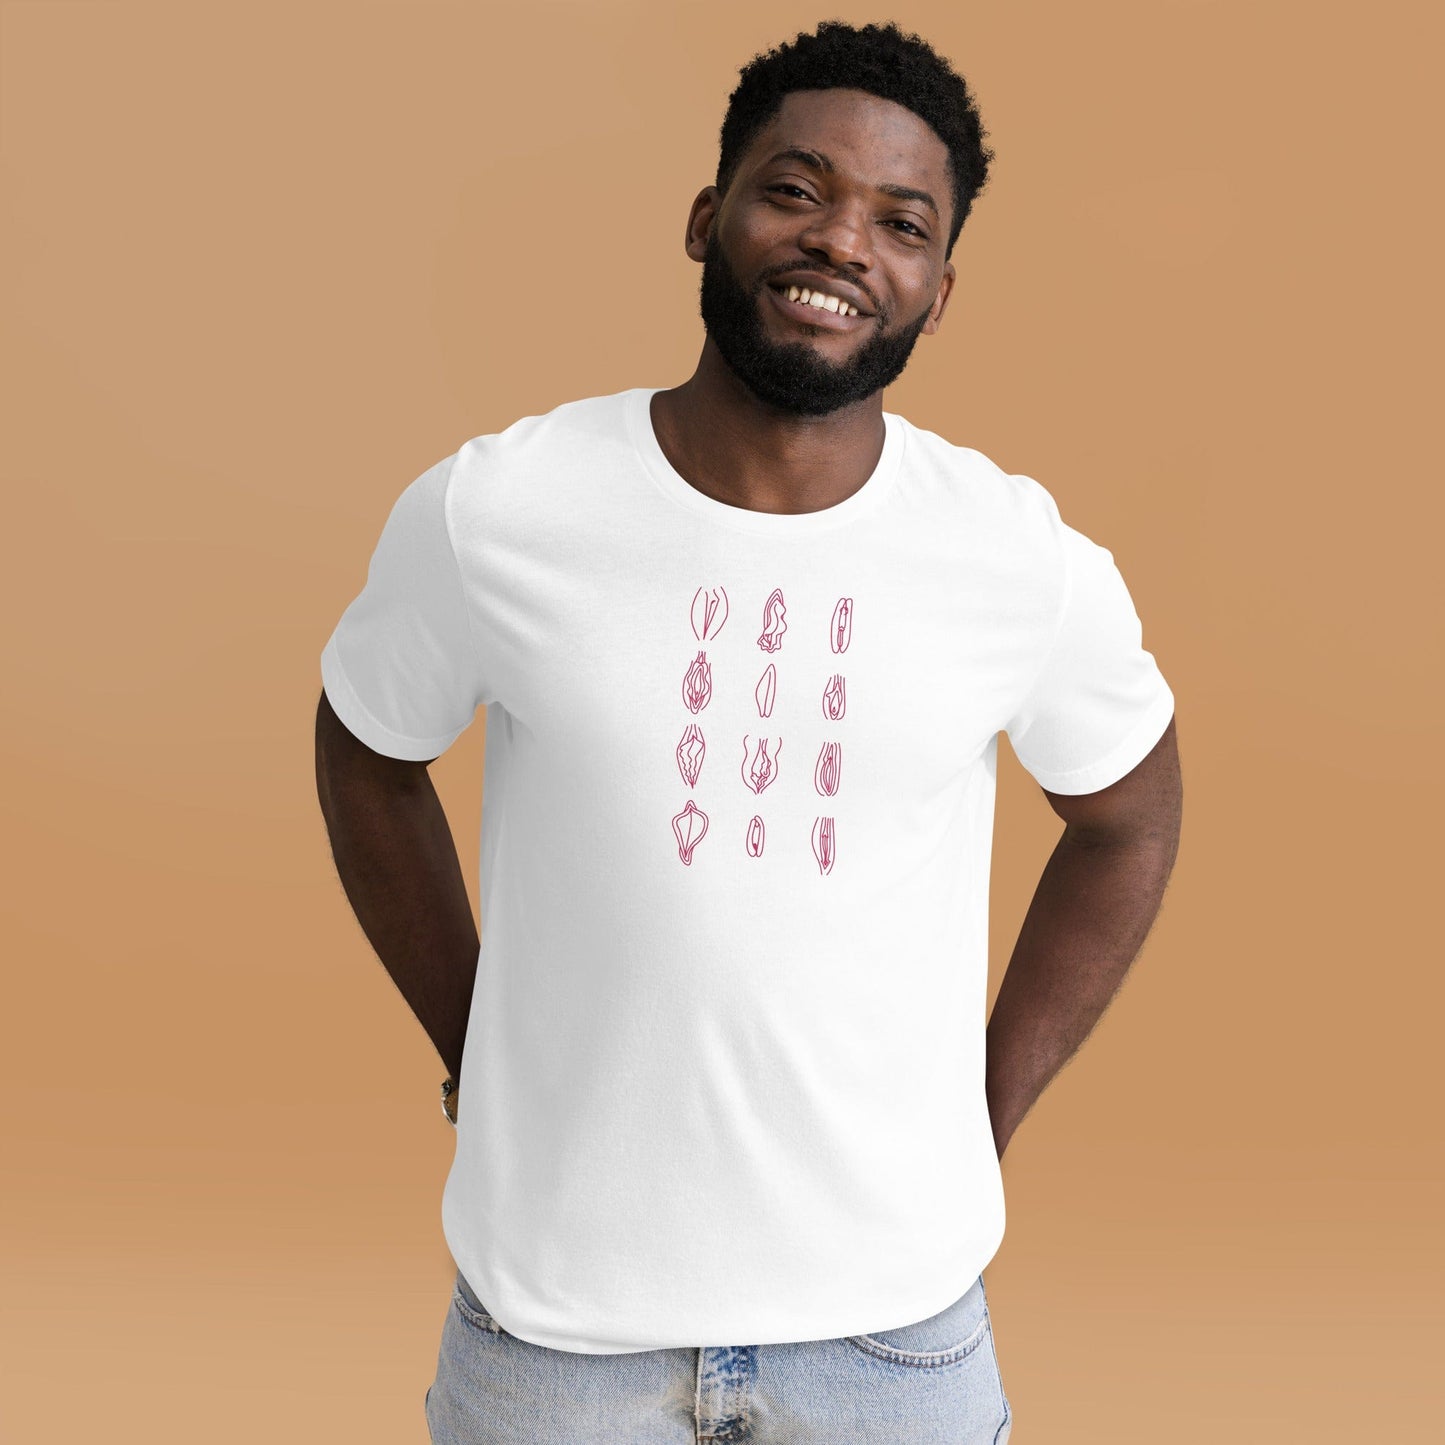 VAGPWR 12 vulvas - Unisex t-shirt